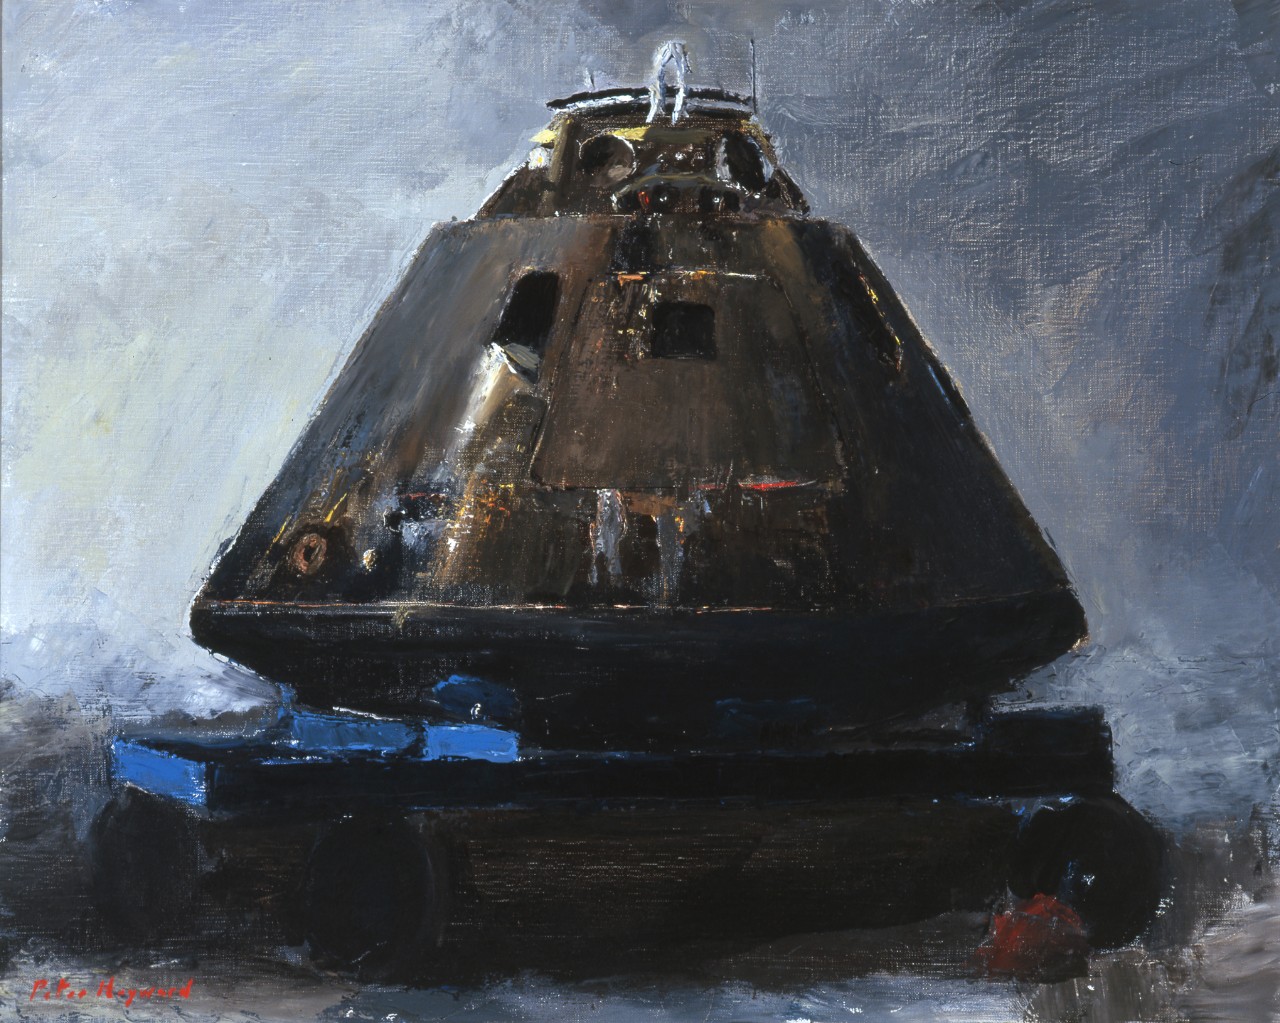 The Apollo 13 space capsule